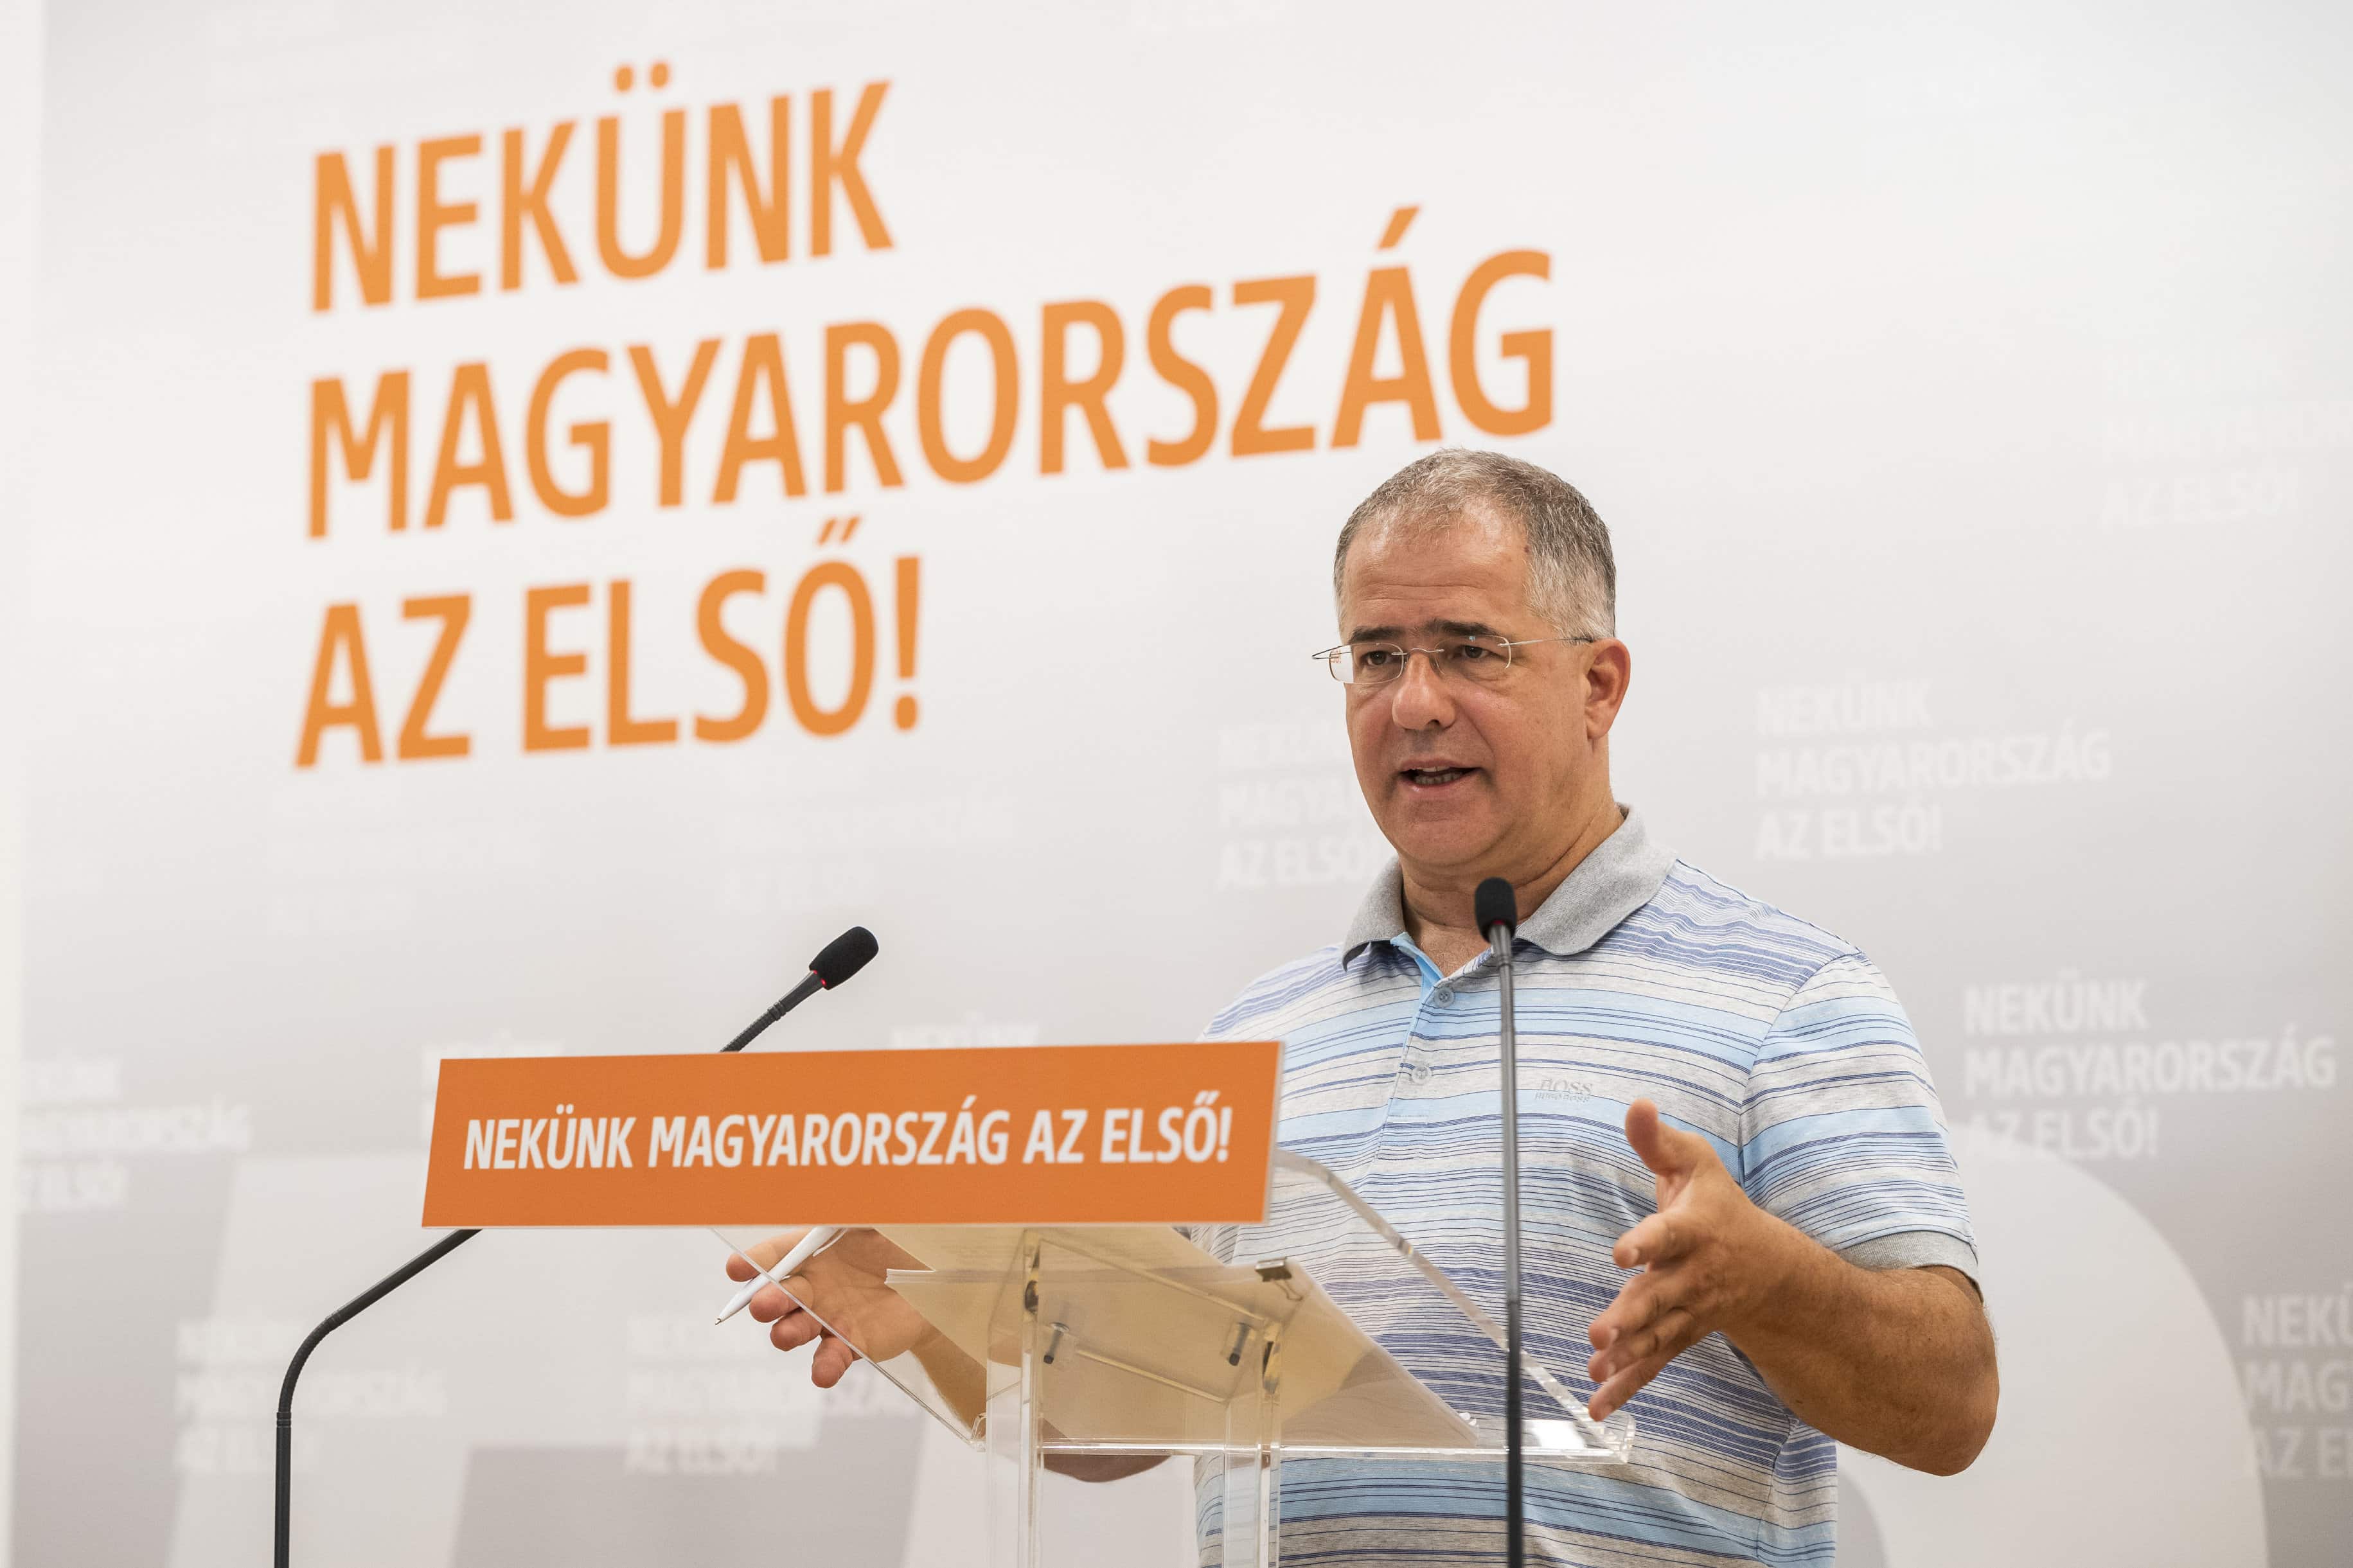 fidesz campaign Kósa